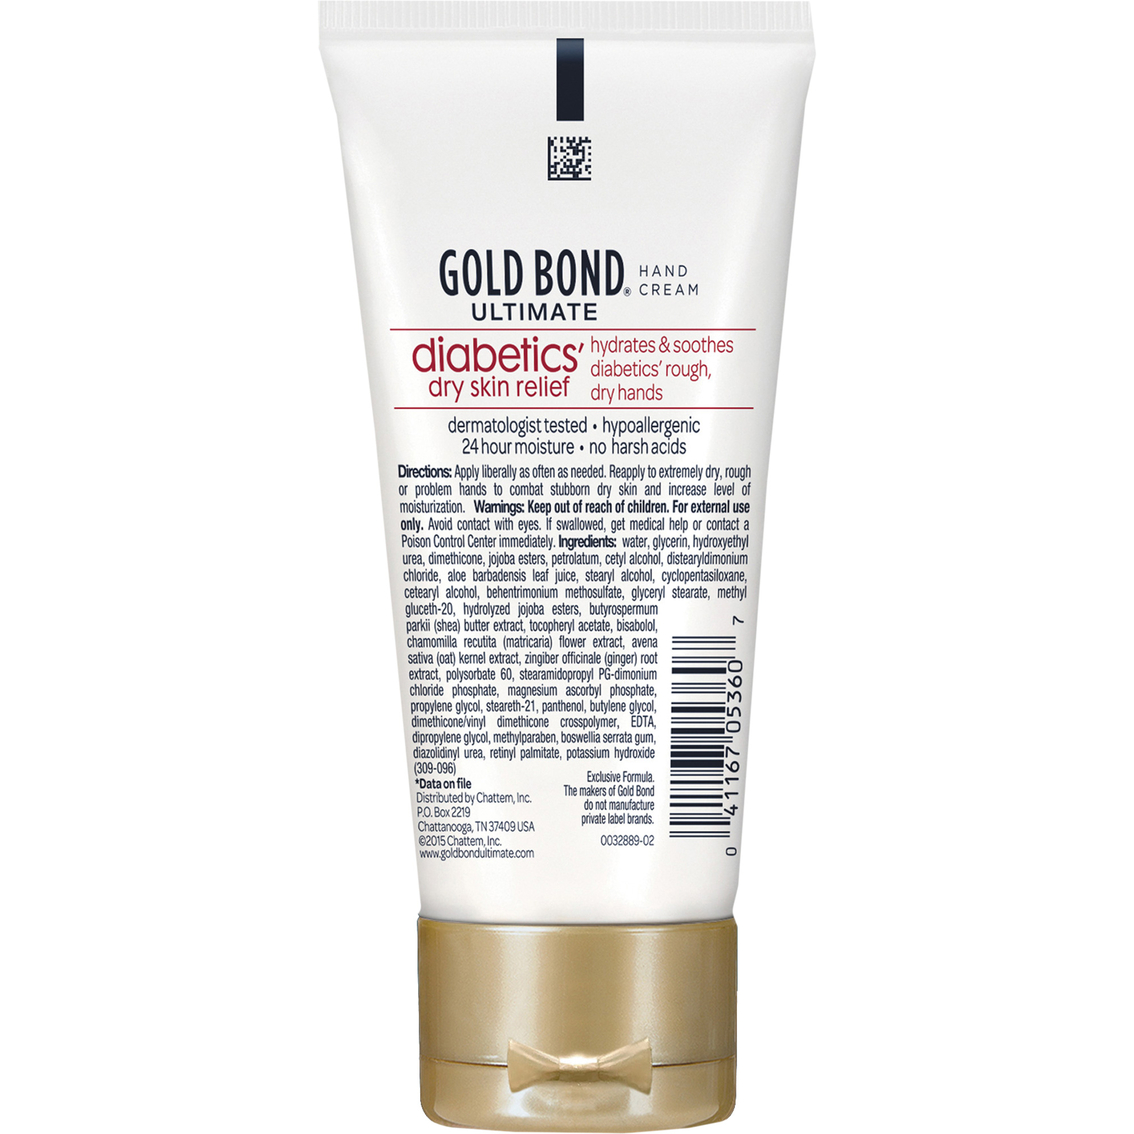 Gold Bond Ultimate Diabetic Hand Cream - Image 2 of 2